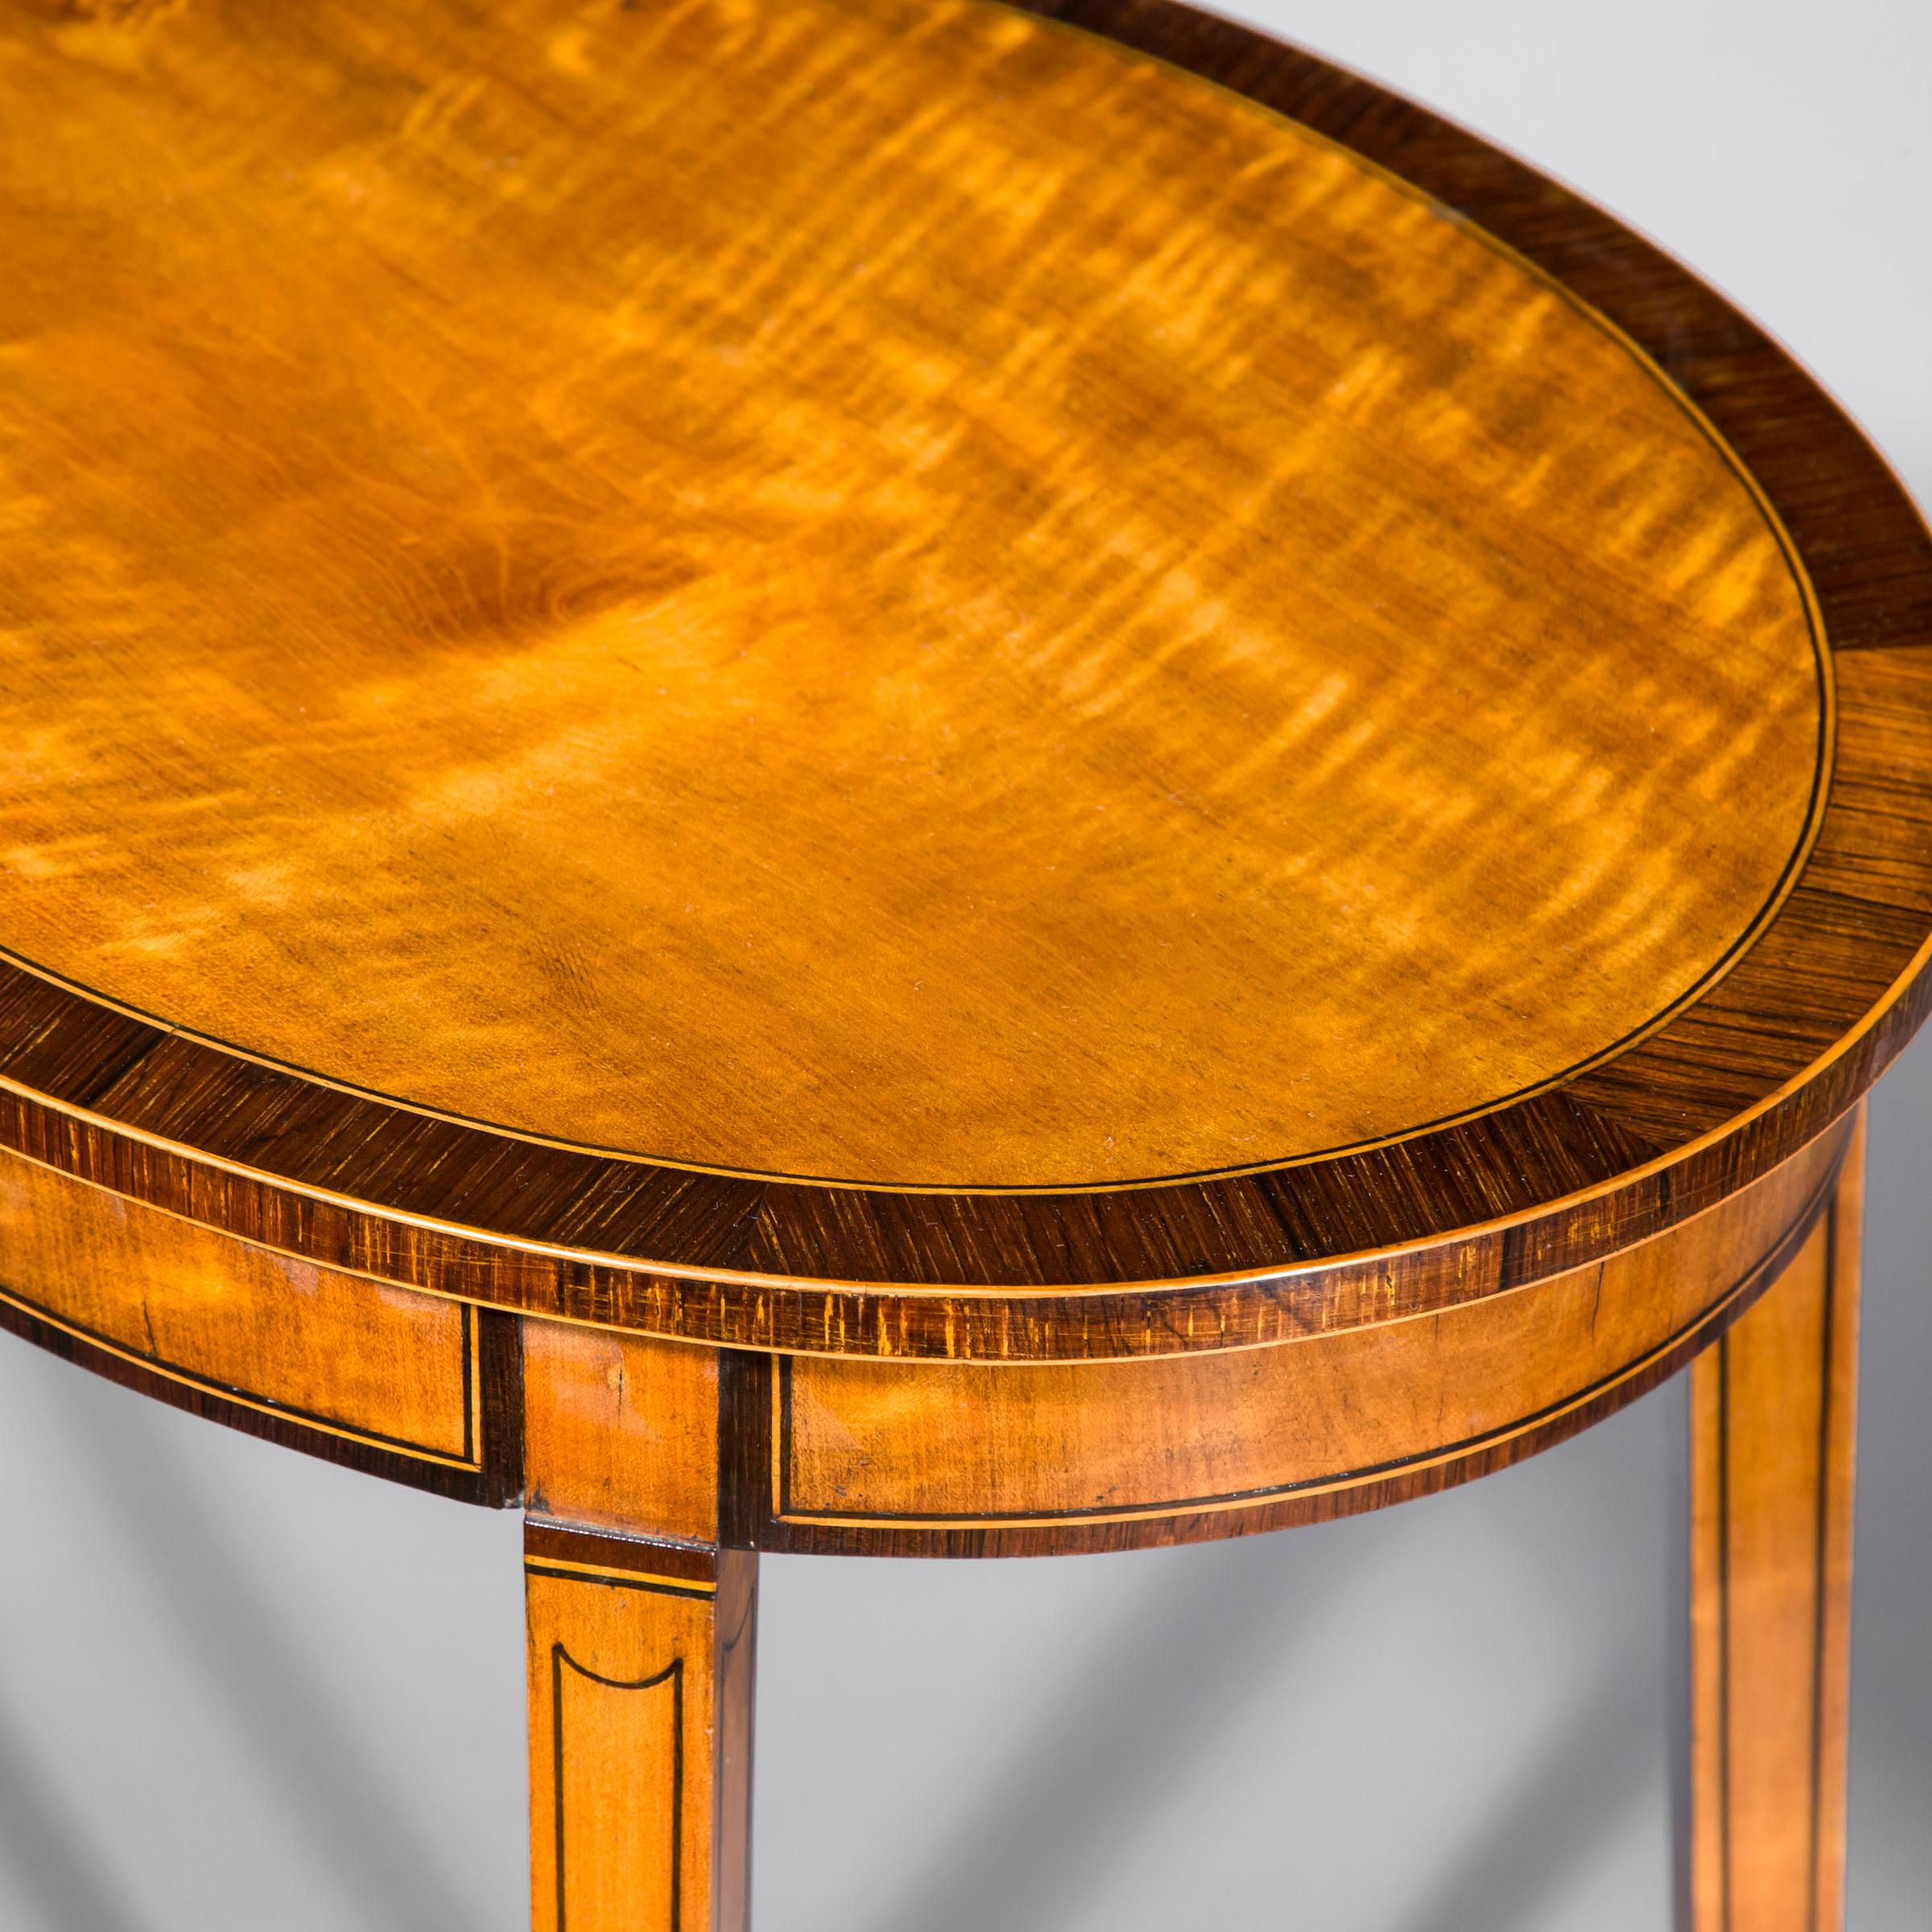 British Antique Sheraton Style Satinwood Oval Table